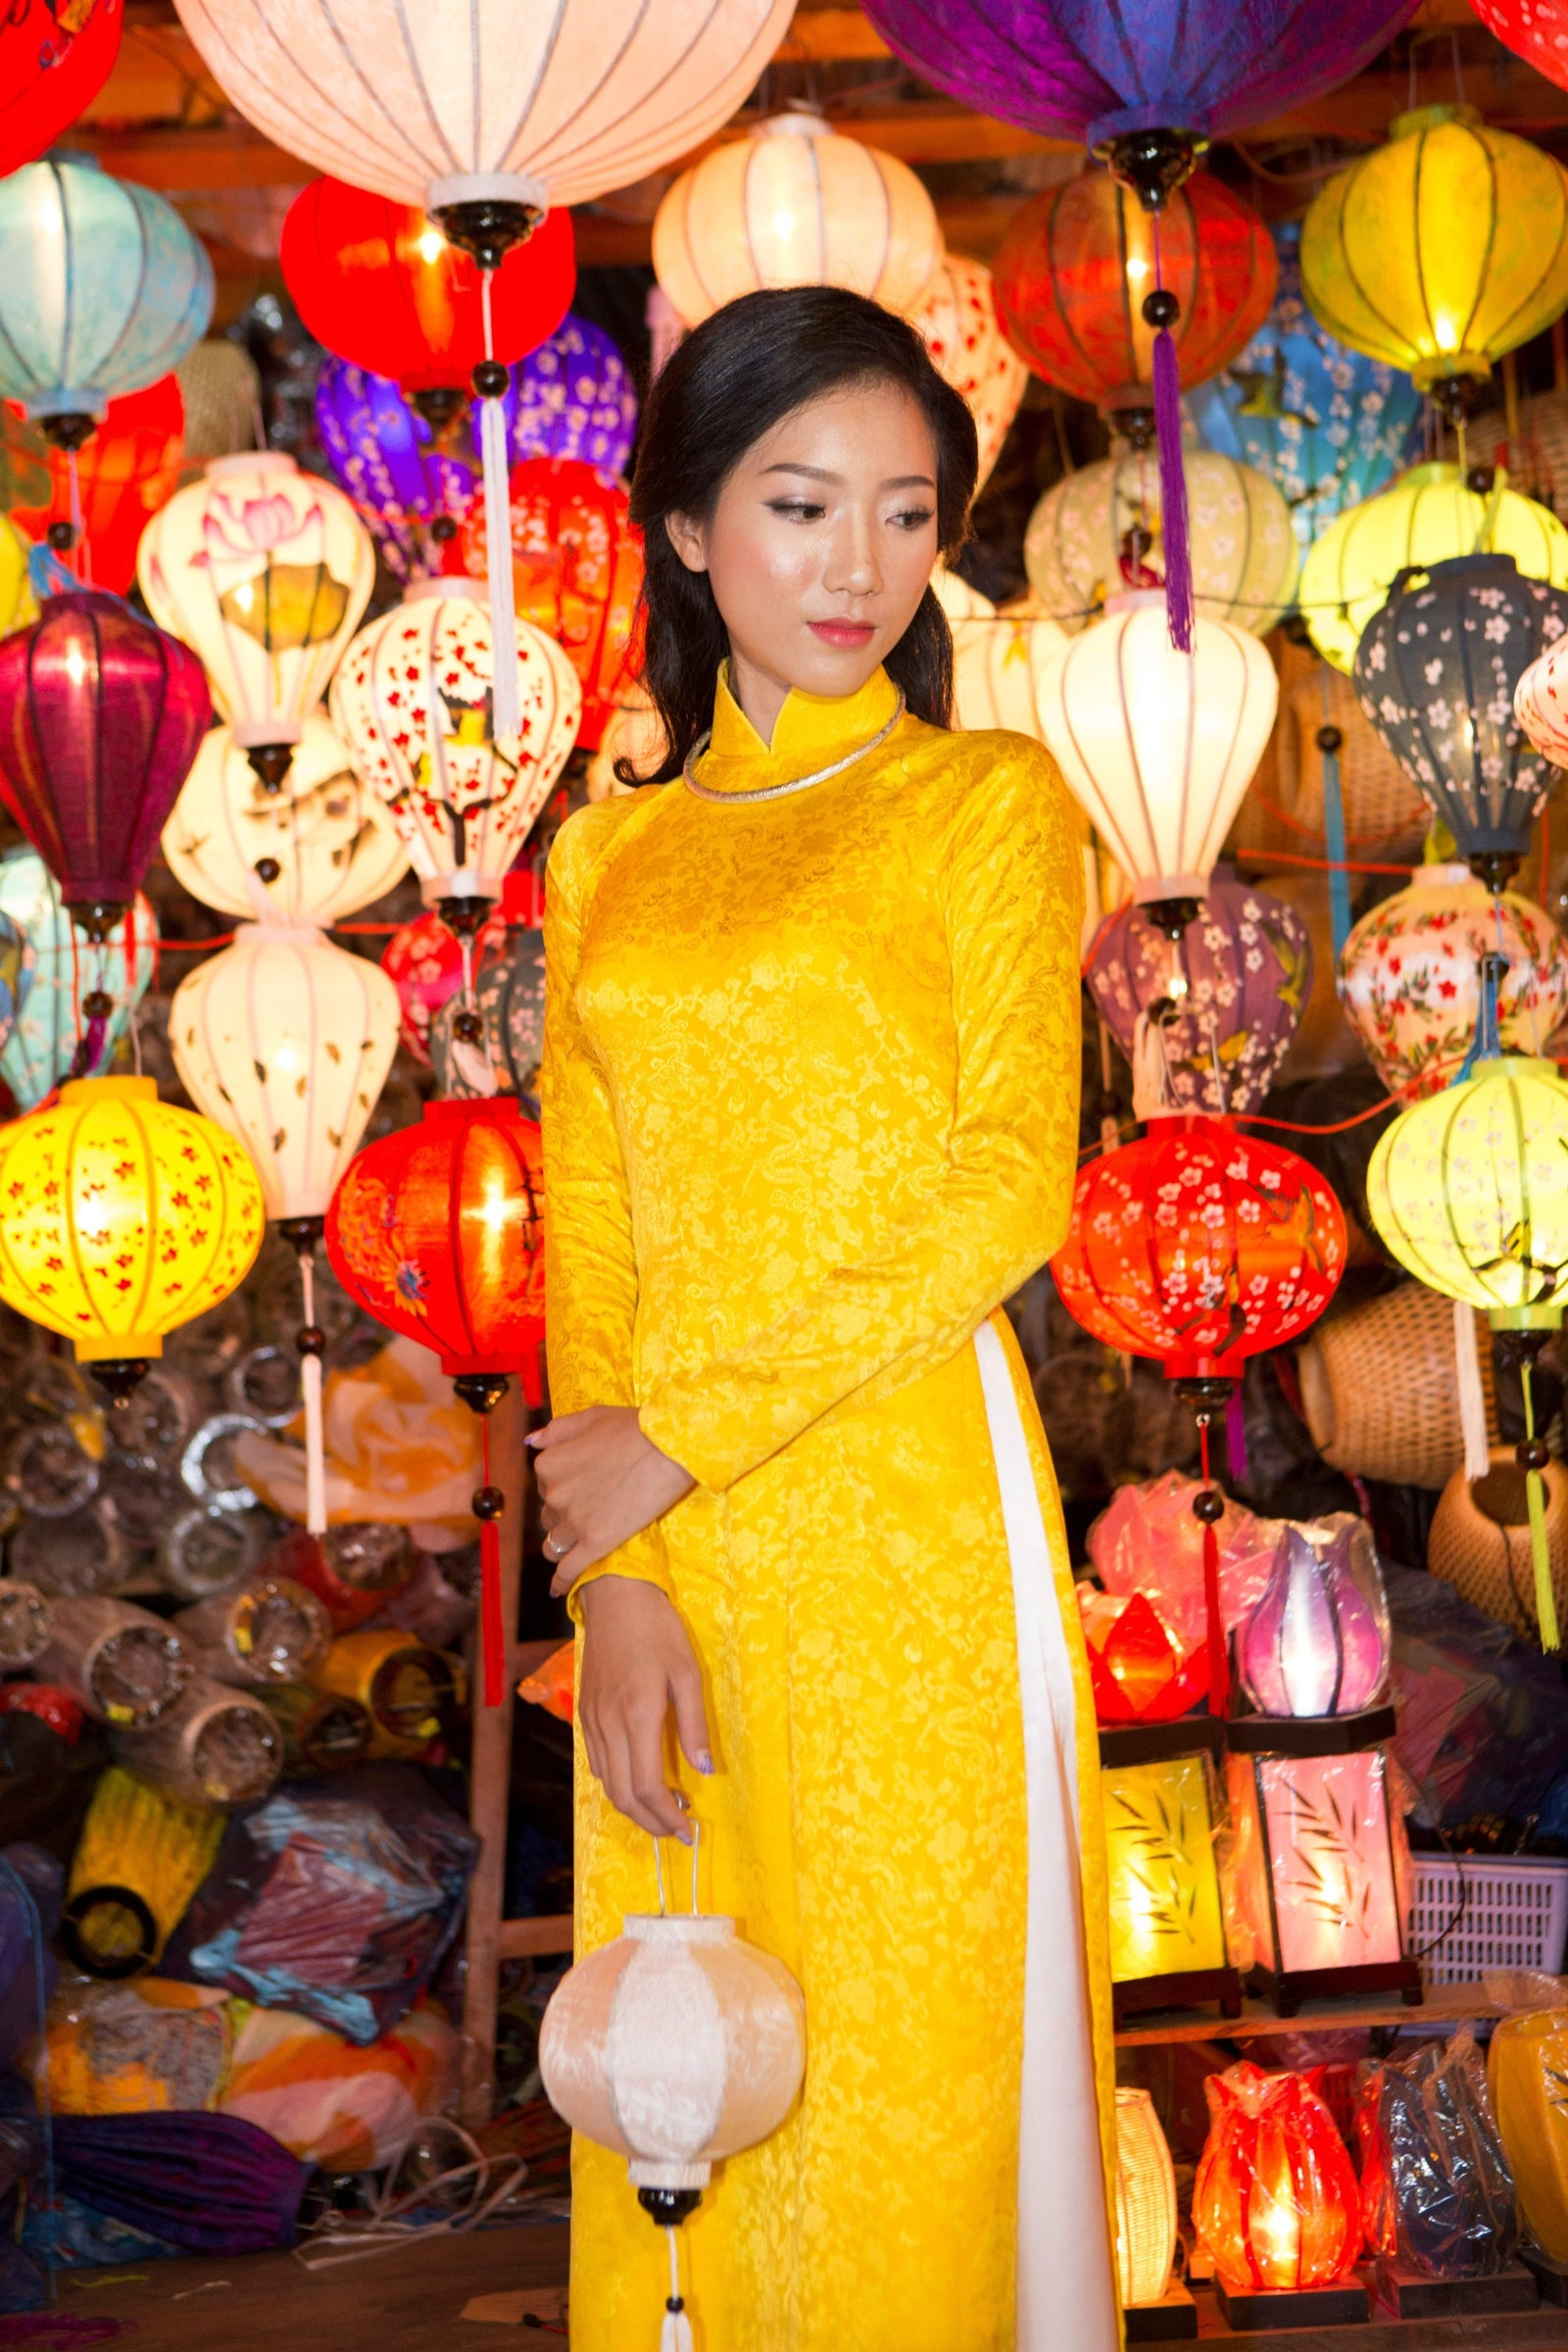 Black Ao Dai Vietnamese Chiffon Double Layer Long Dress with Pants G67